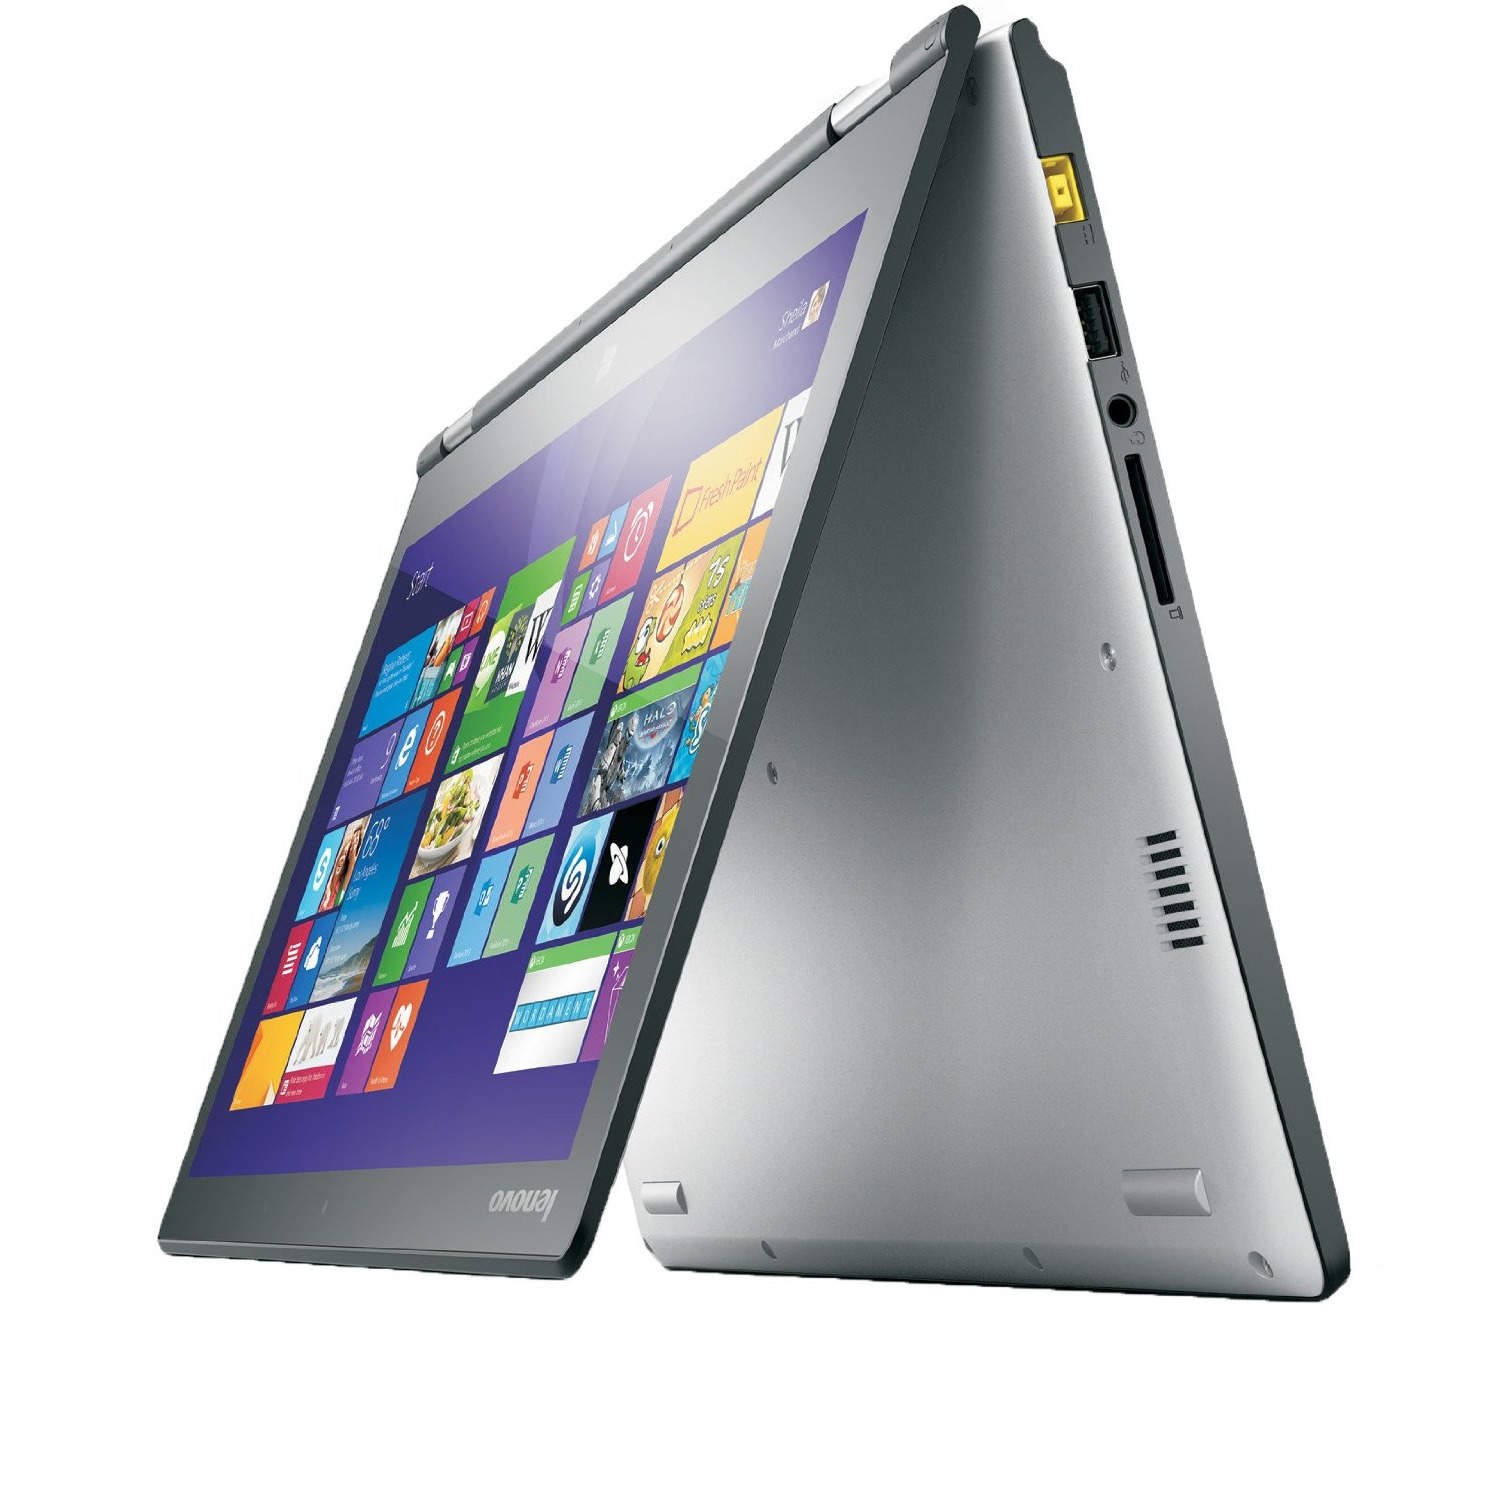 Lenovo Yoga 2 13 Core i3-4010U 8GB 500GB 13.3 inch Full HD Convertible Touchsceen Windows 8.1 Laptop - Direct